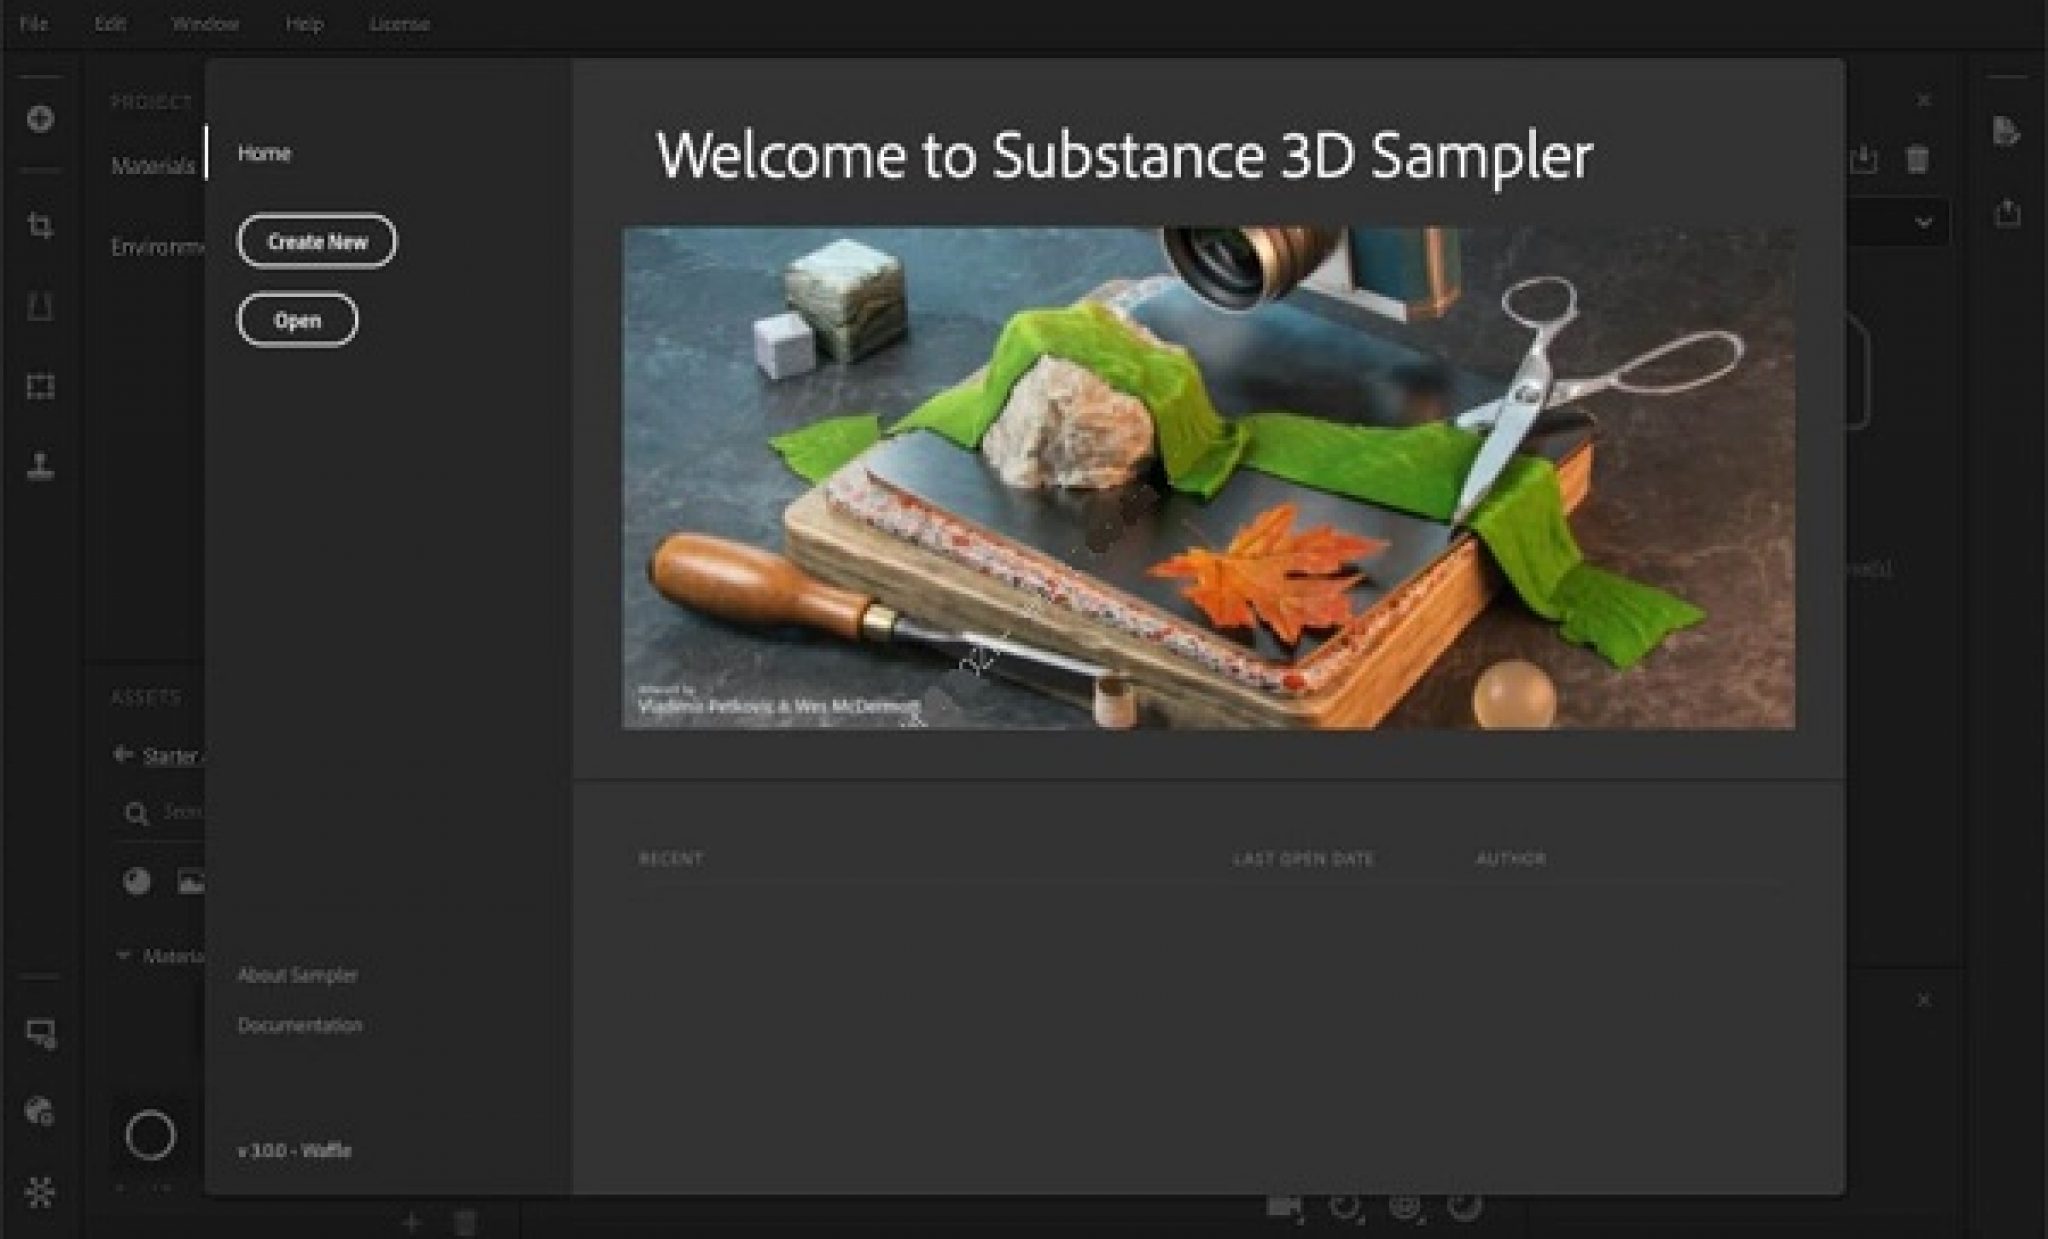 Adobe Substance 3D Sampler 4.1.2.3298 download the last version for android